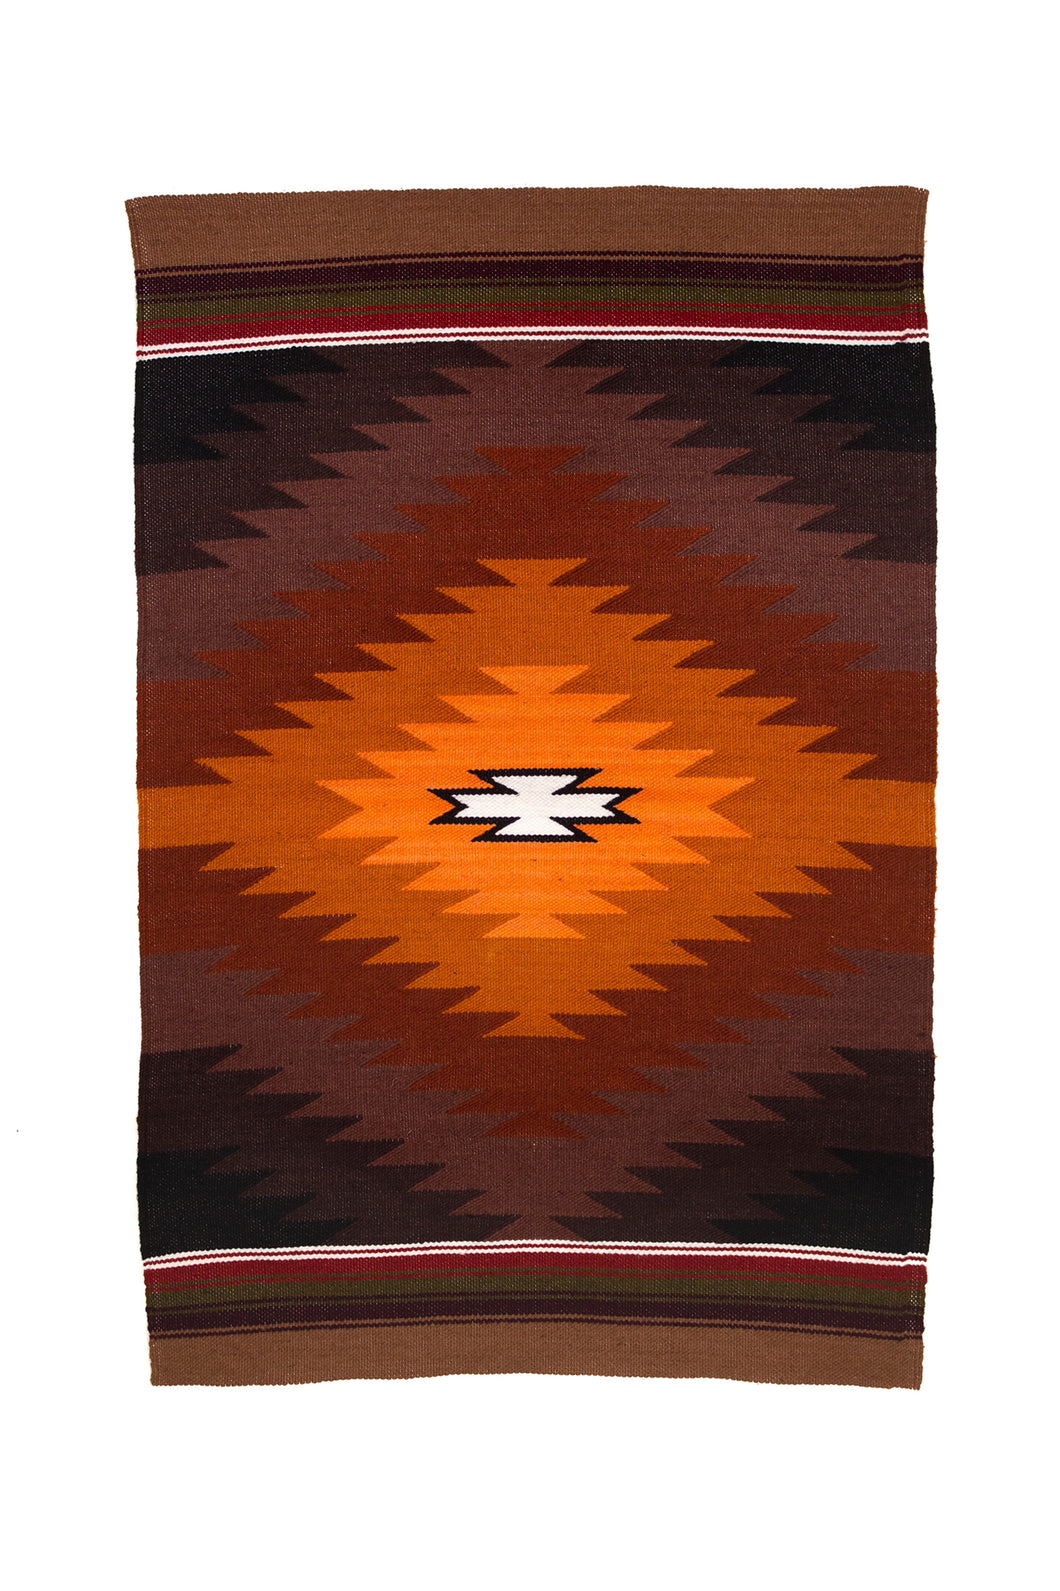 Wool Tapestries 24 X 37 inch